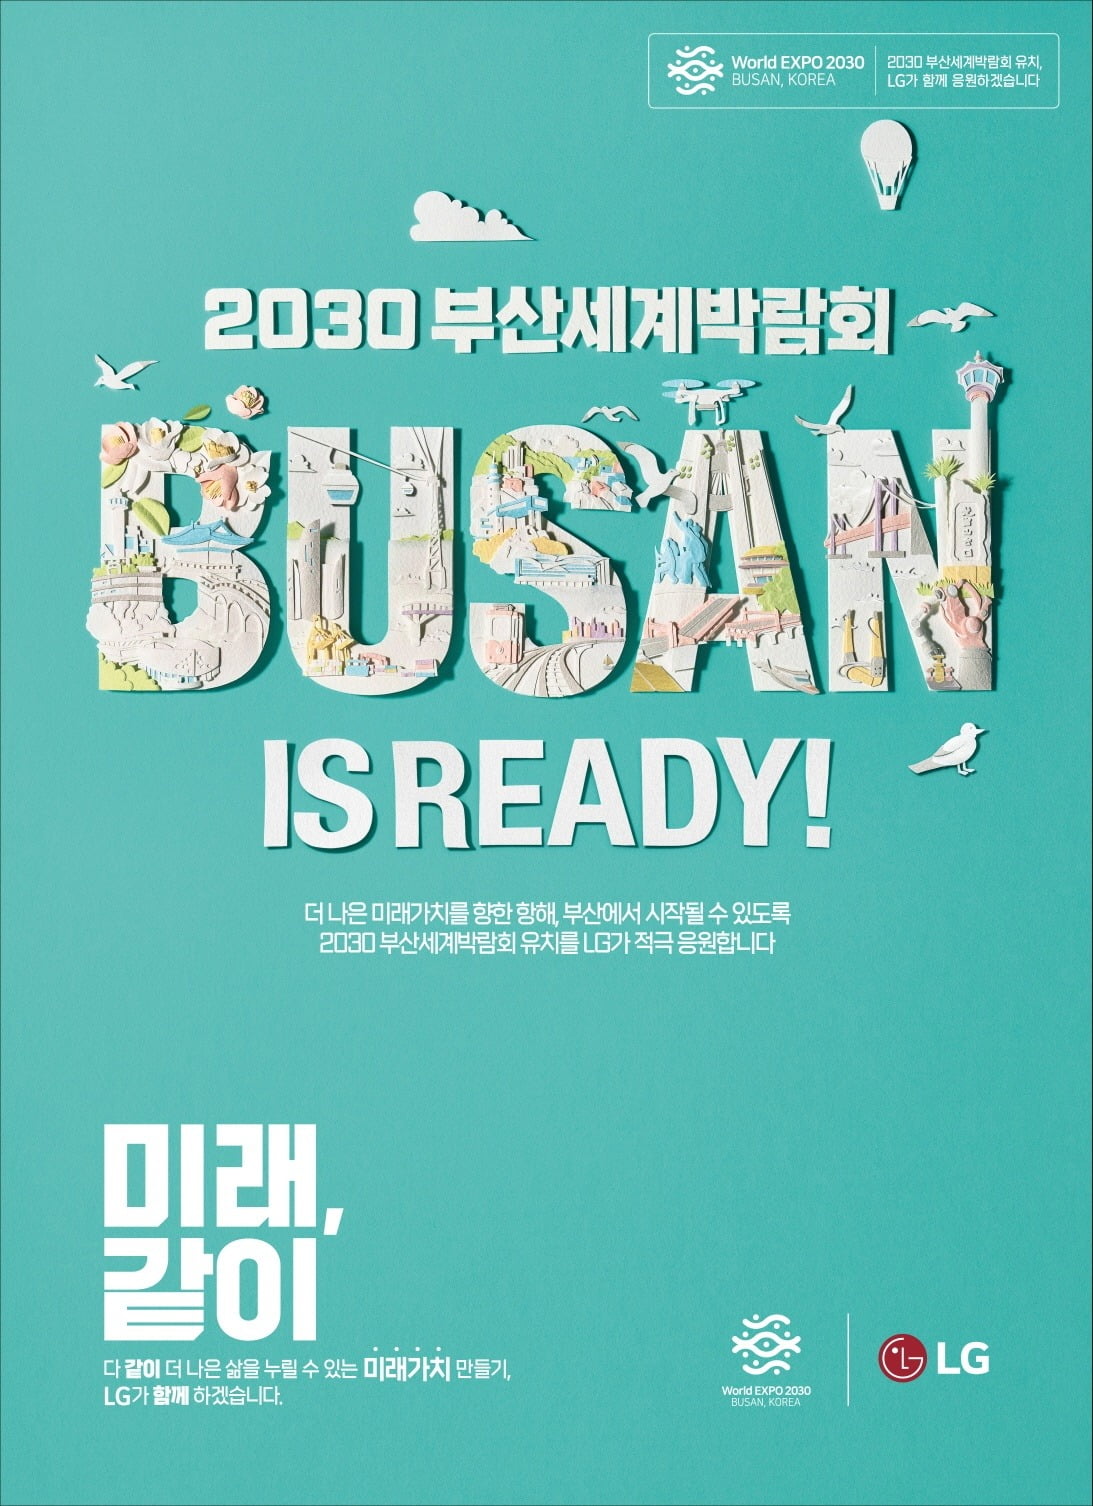 LG가 새롭게 선보인 '2030 부산엑스포' 유치 응원 신문광고. 사진=LG 제공